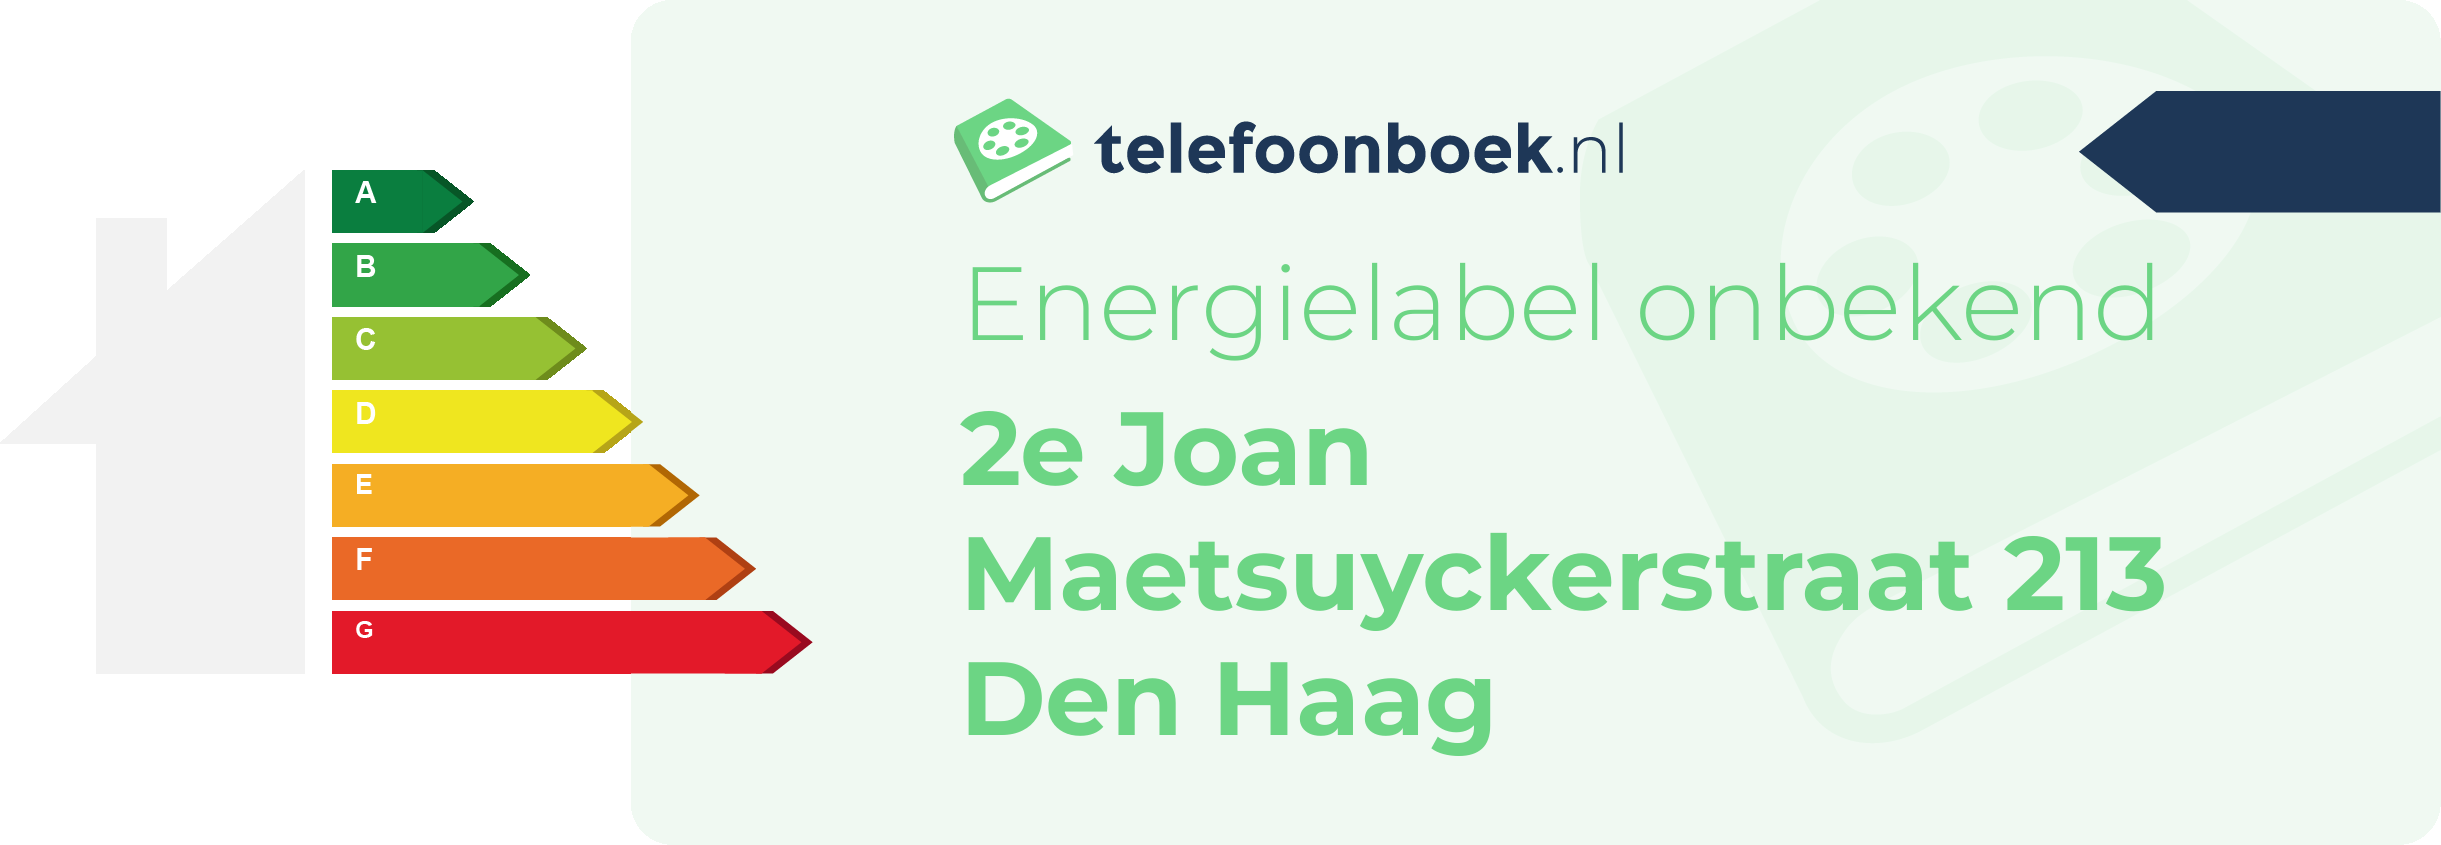 Energielabel 2e Joan Maetsuyckerstraat 213 Den Haag